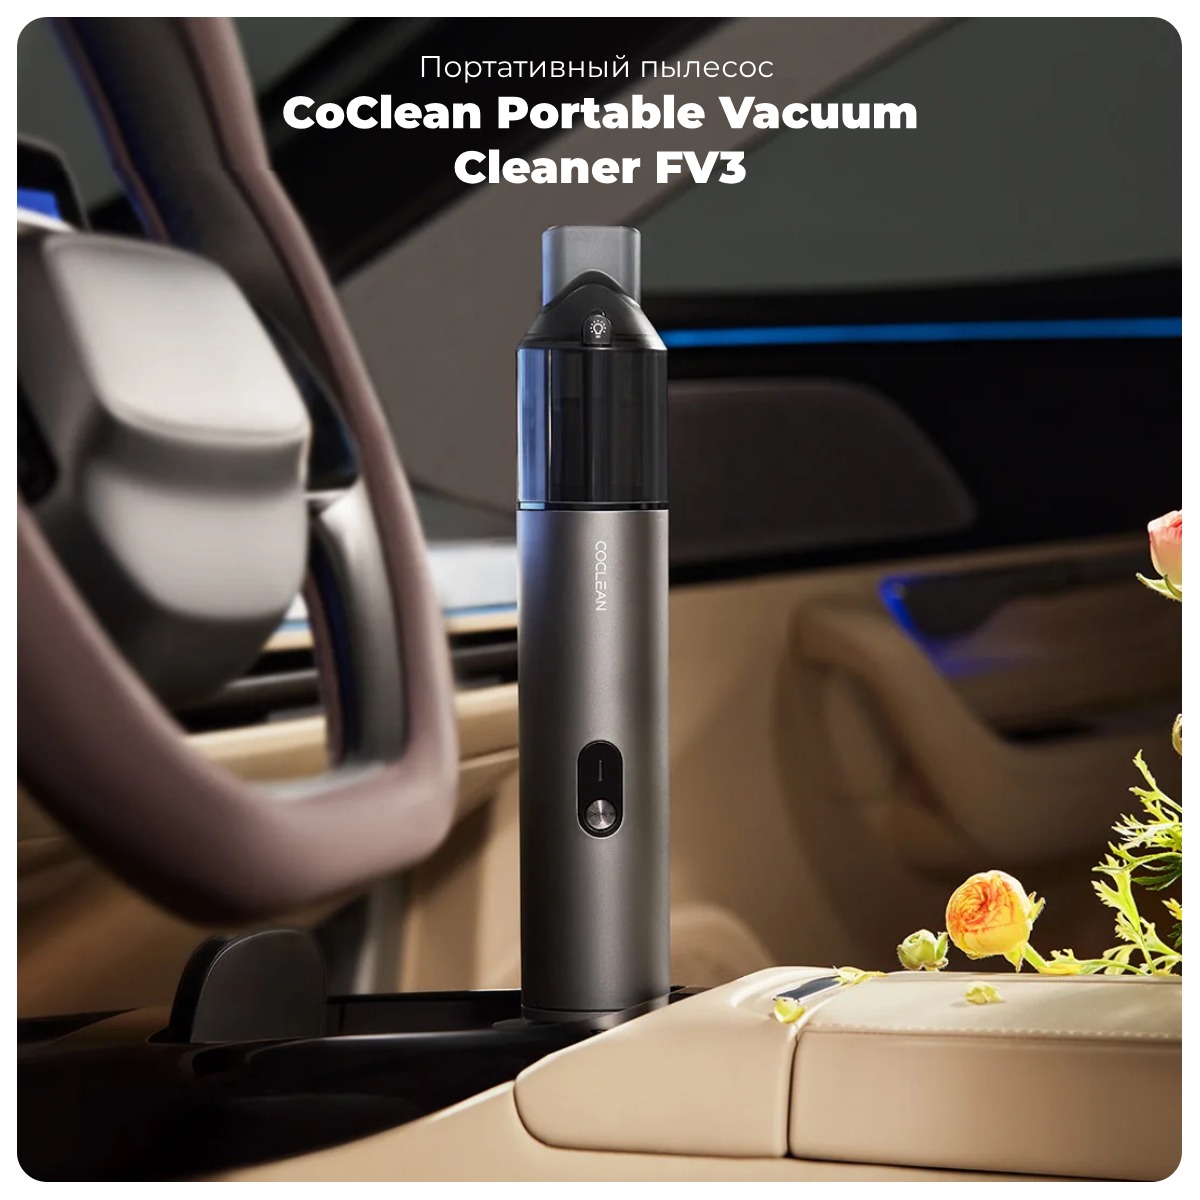 CoClean-Portable-Vacuum-Cleaner-FV3-01